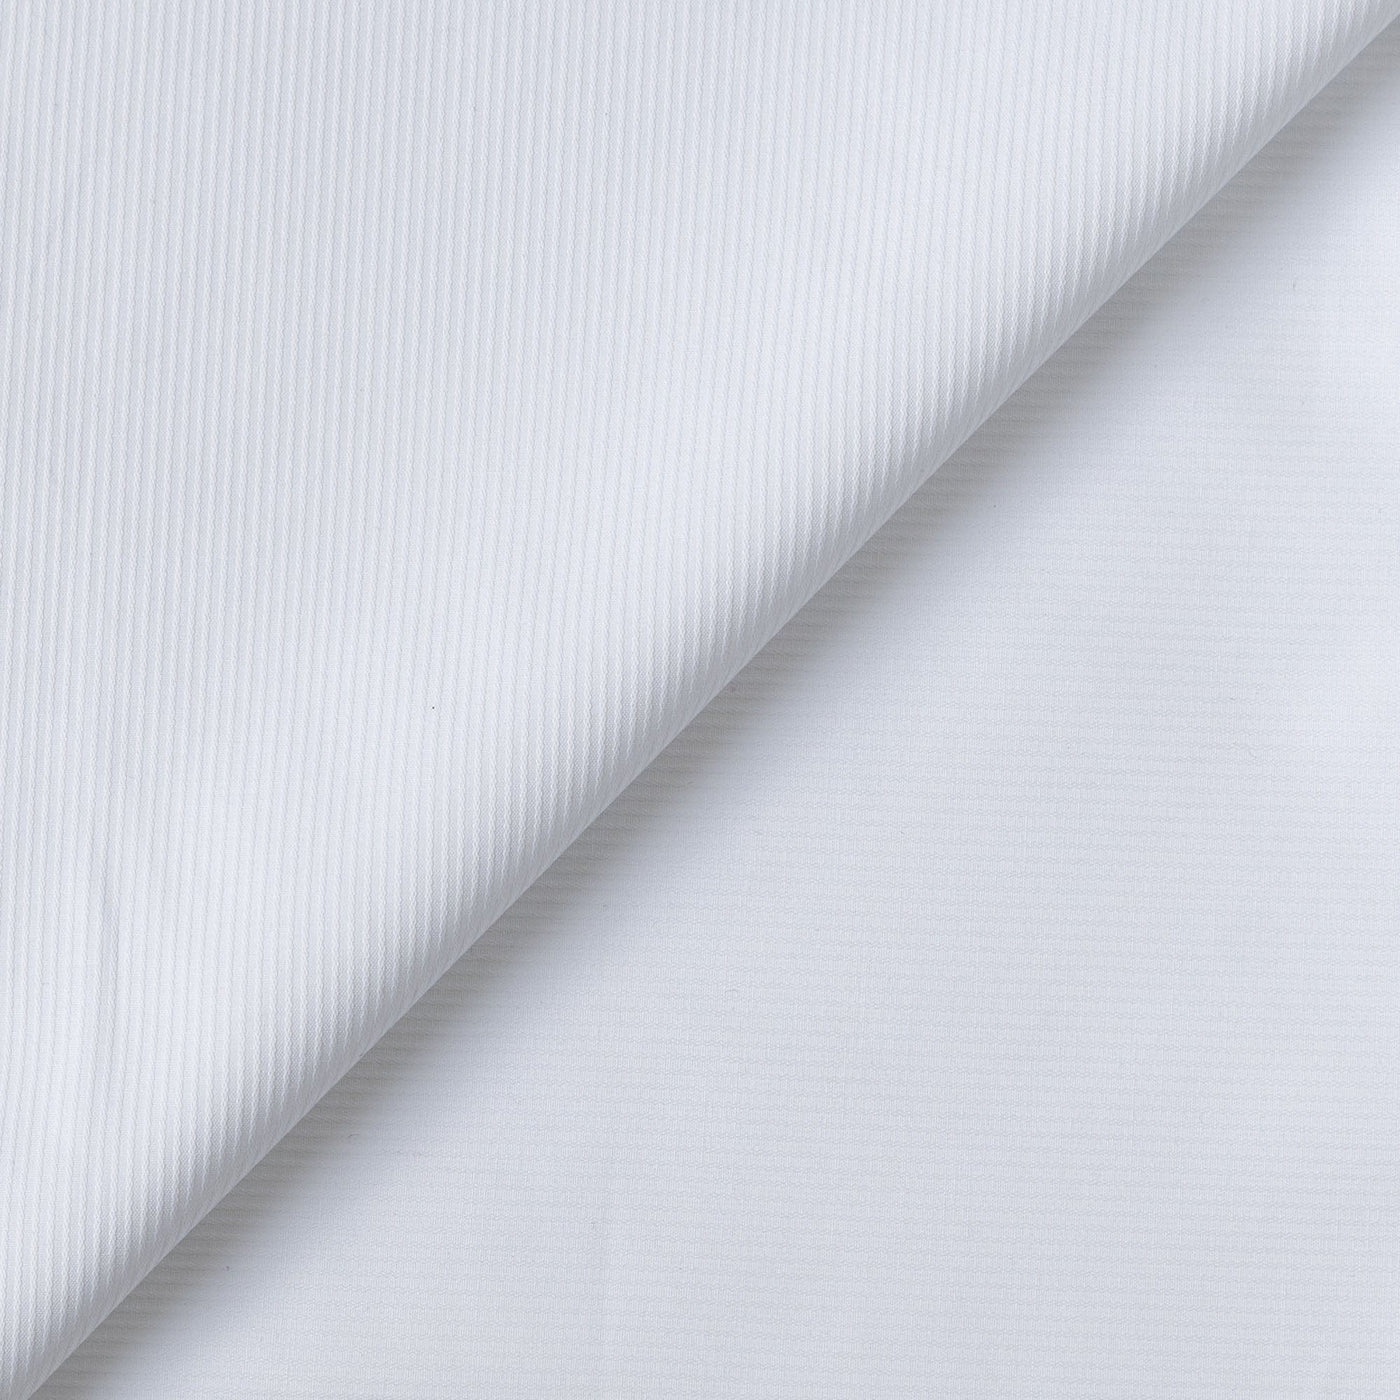 Fabric Pandit Cut Piece (CUT PIECE) Men's White Geomettric Linings Pattern Cotton Satin Dobby Luxury Shirting Fabric (Width 58 inch)